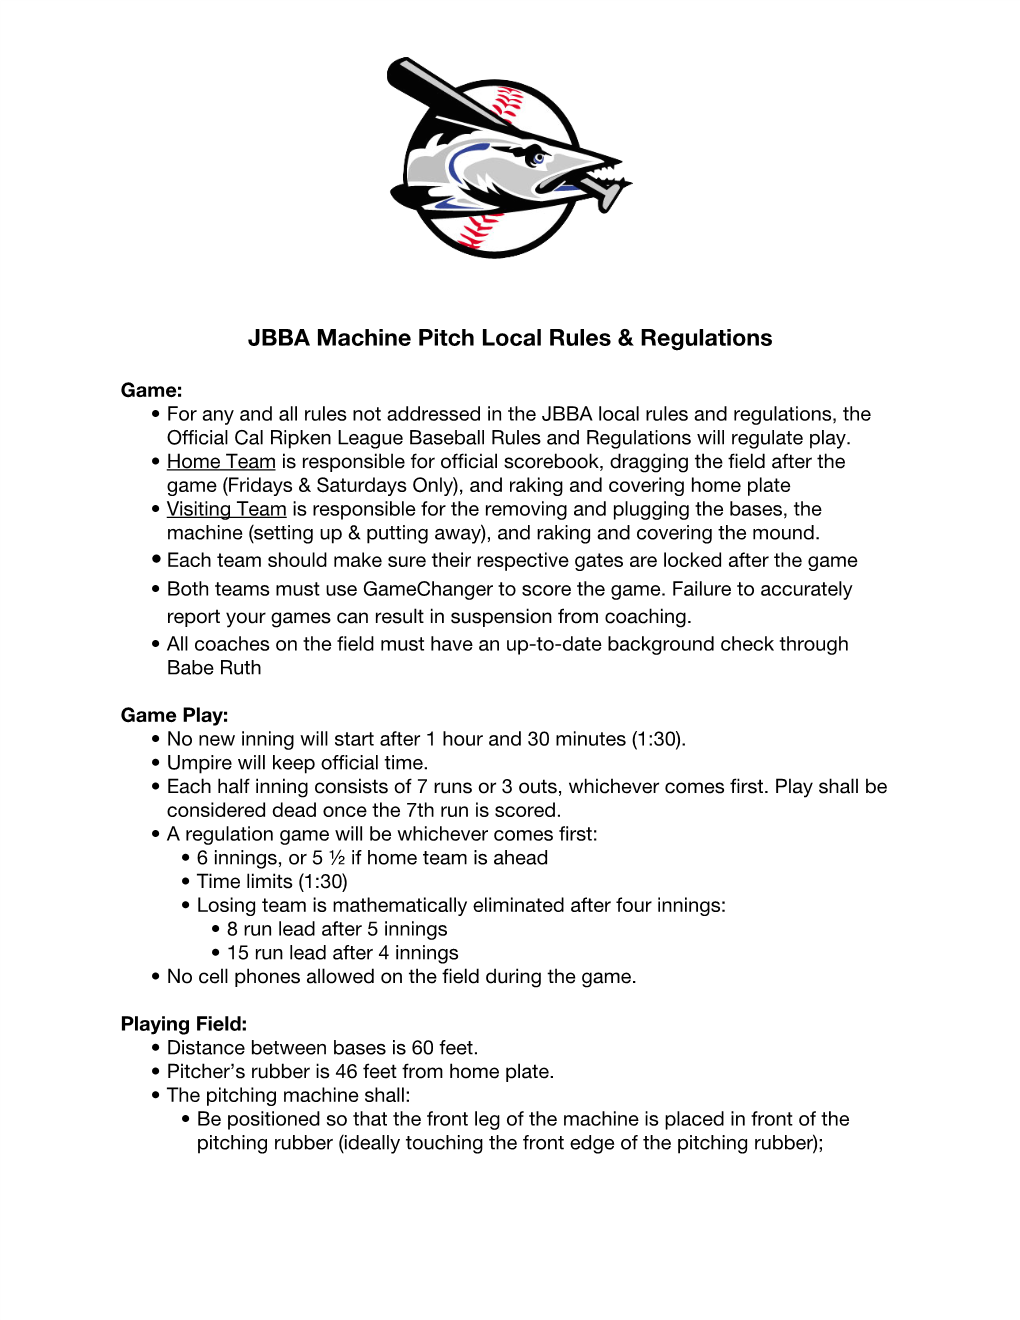 JBBA Machine Pitch Local Rules & Regulations